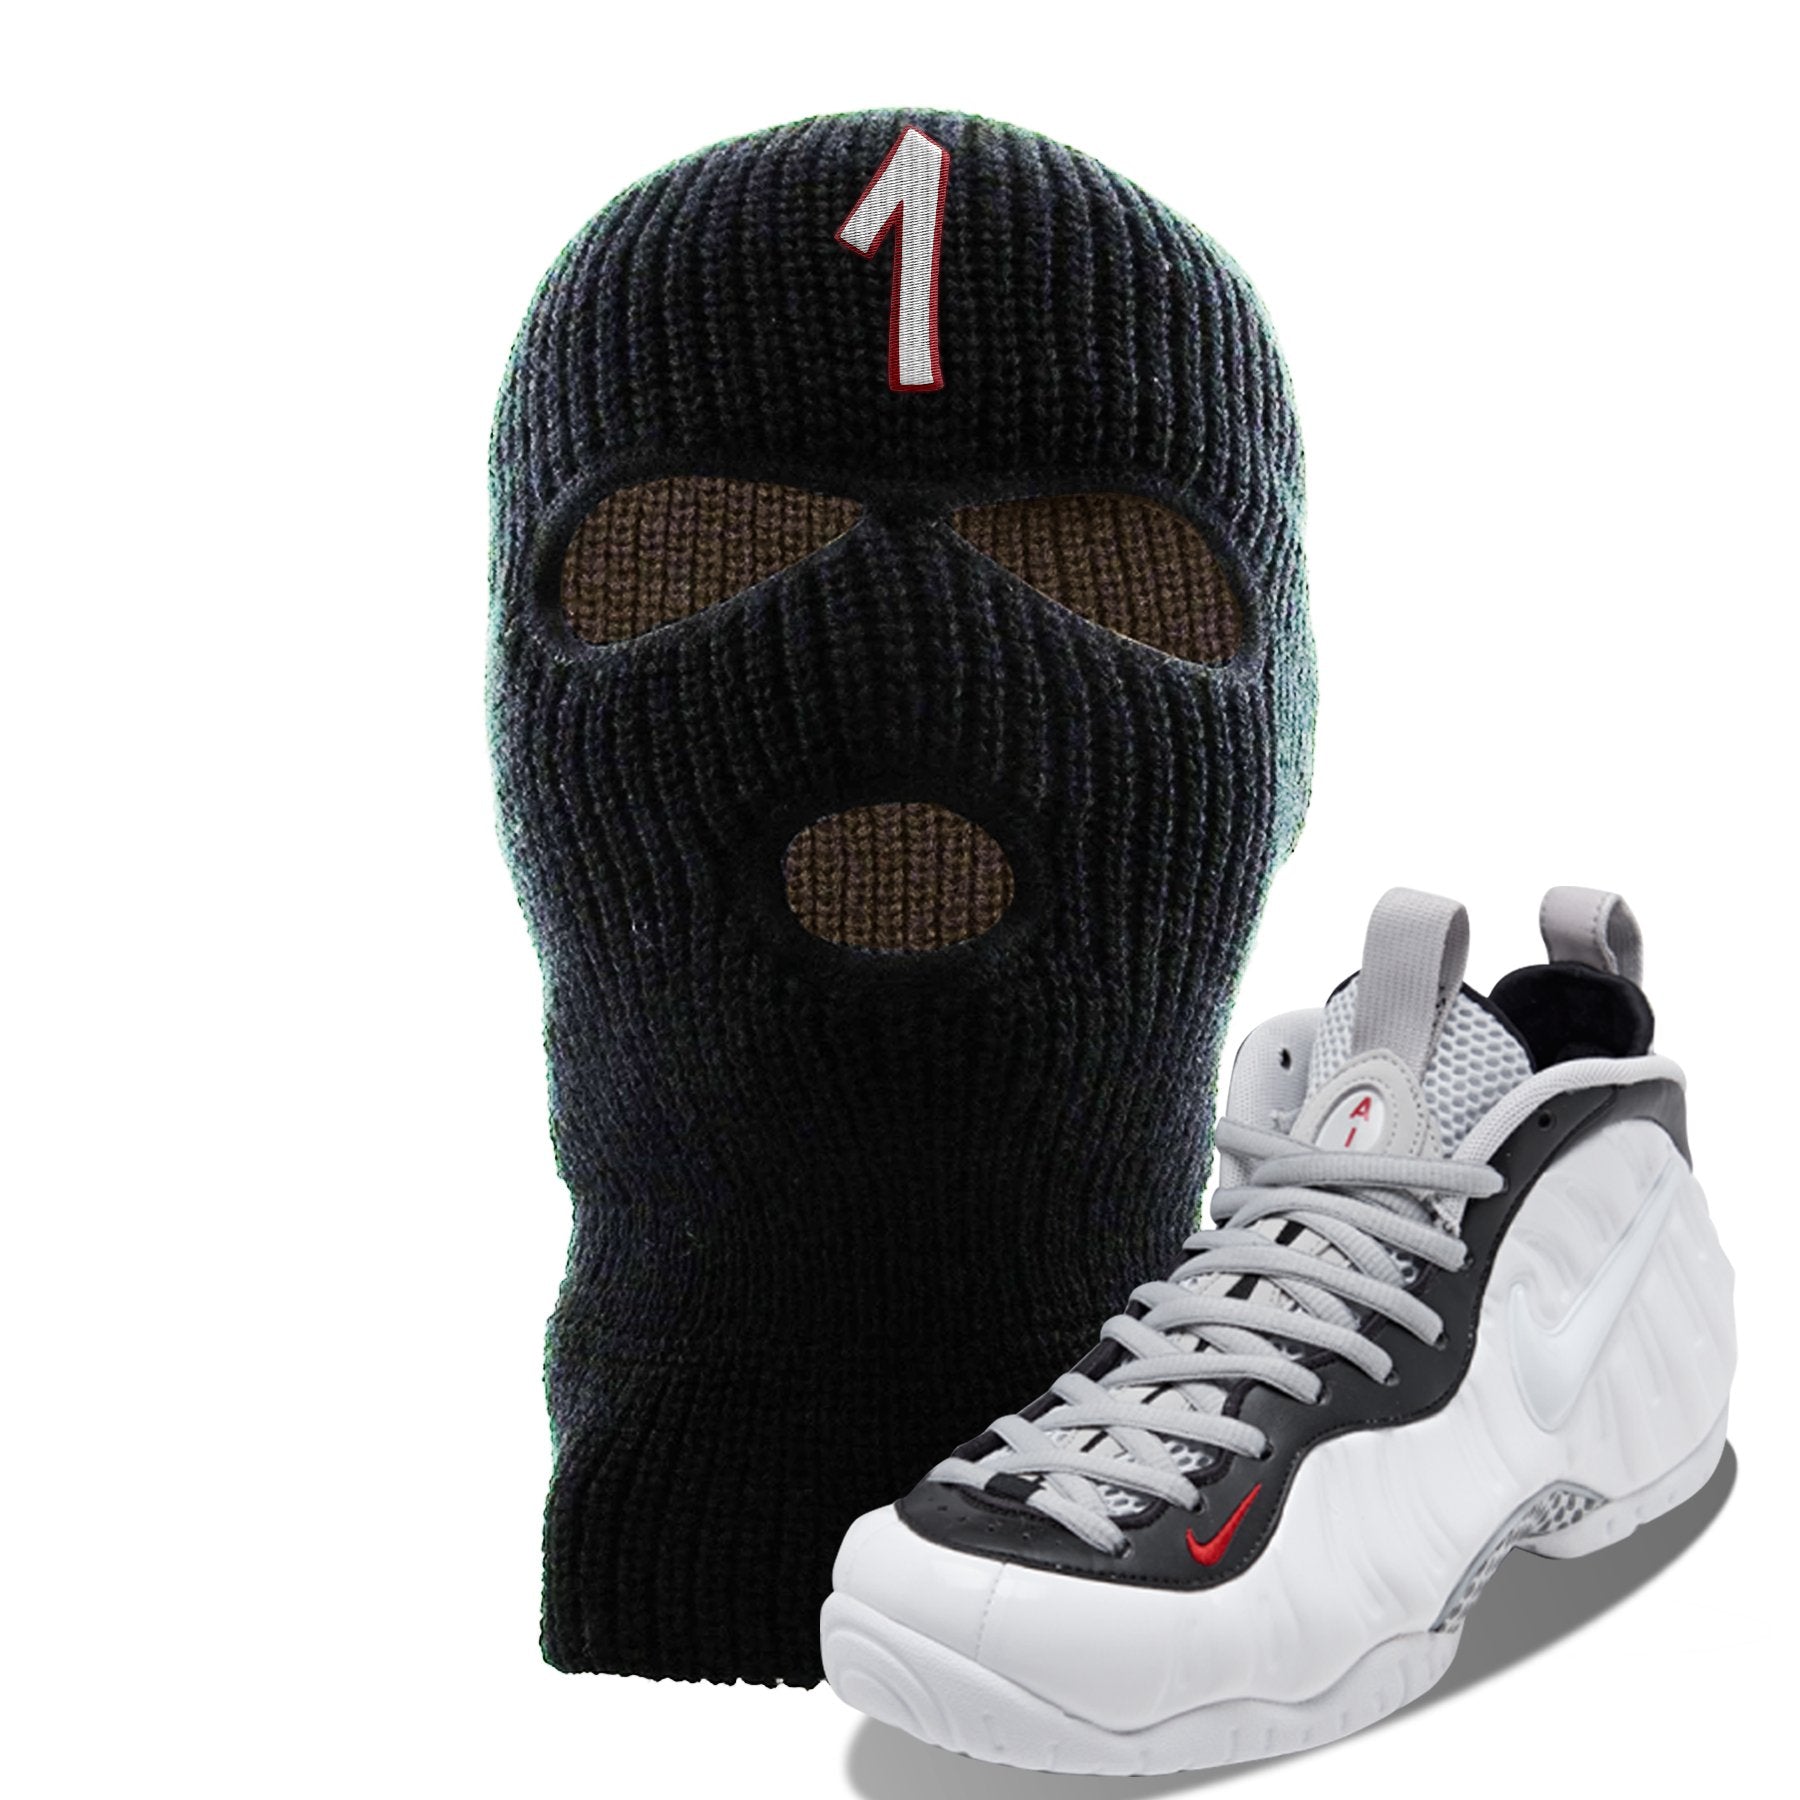 Foamposite Pro White Black University Red Sneaker Black Ski Mask | Winter Mask to match Nike Air Foamposite Pro White Black University Red Shoes | Penny One